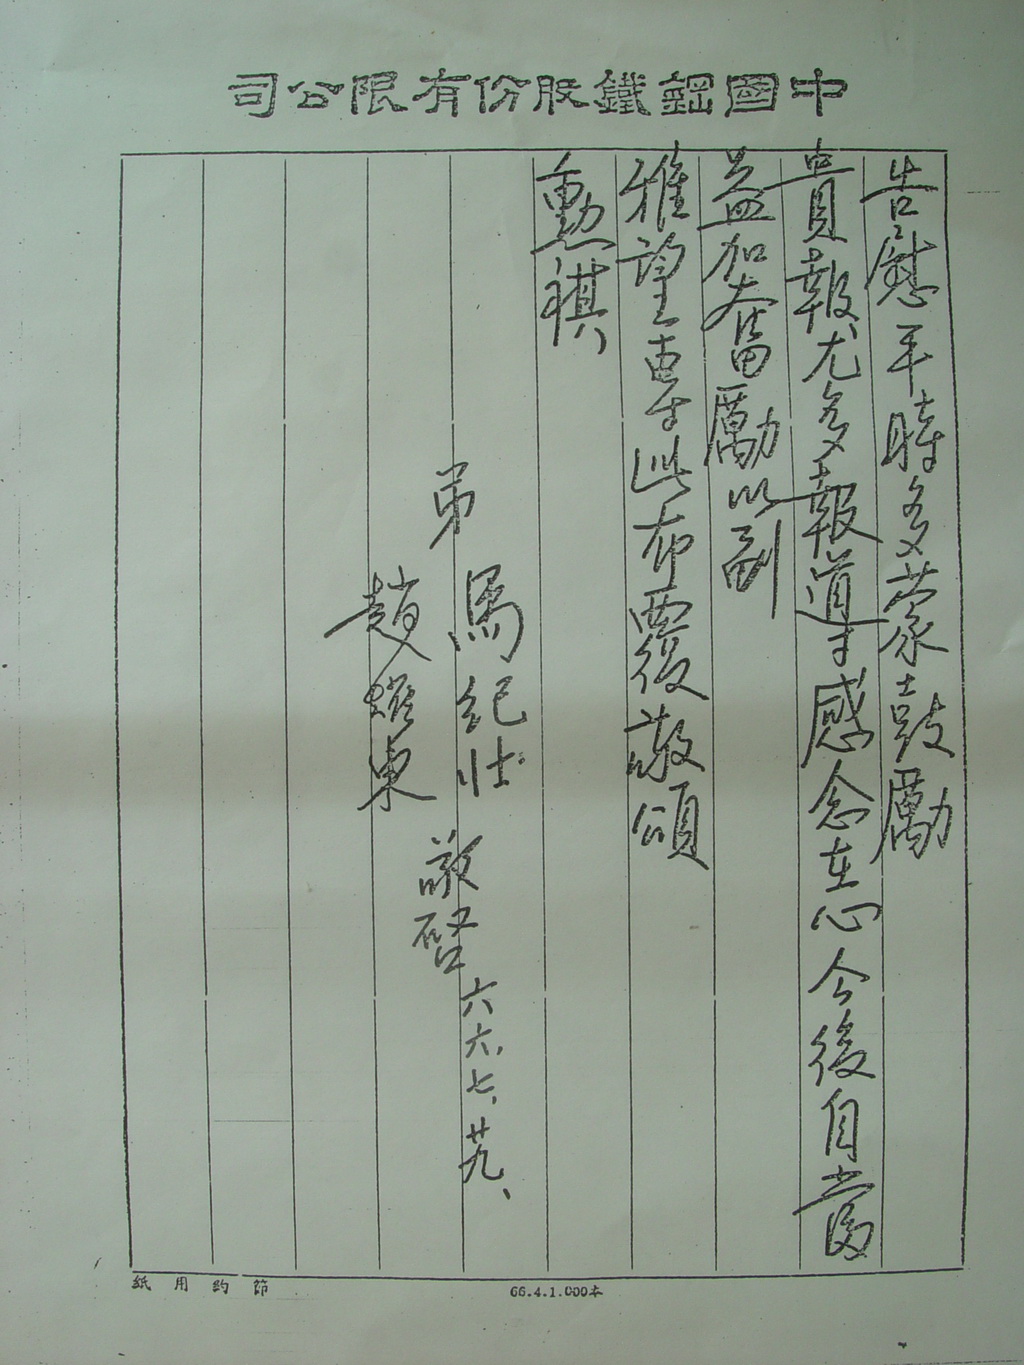 Thank you letter to publisher Cao Sheng-Fen from President Ma Ji-Zhuang and CEO Zhao Yao-Dong, CSC